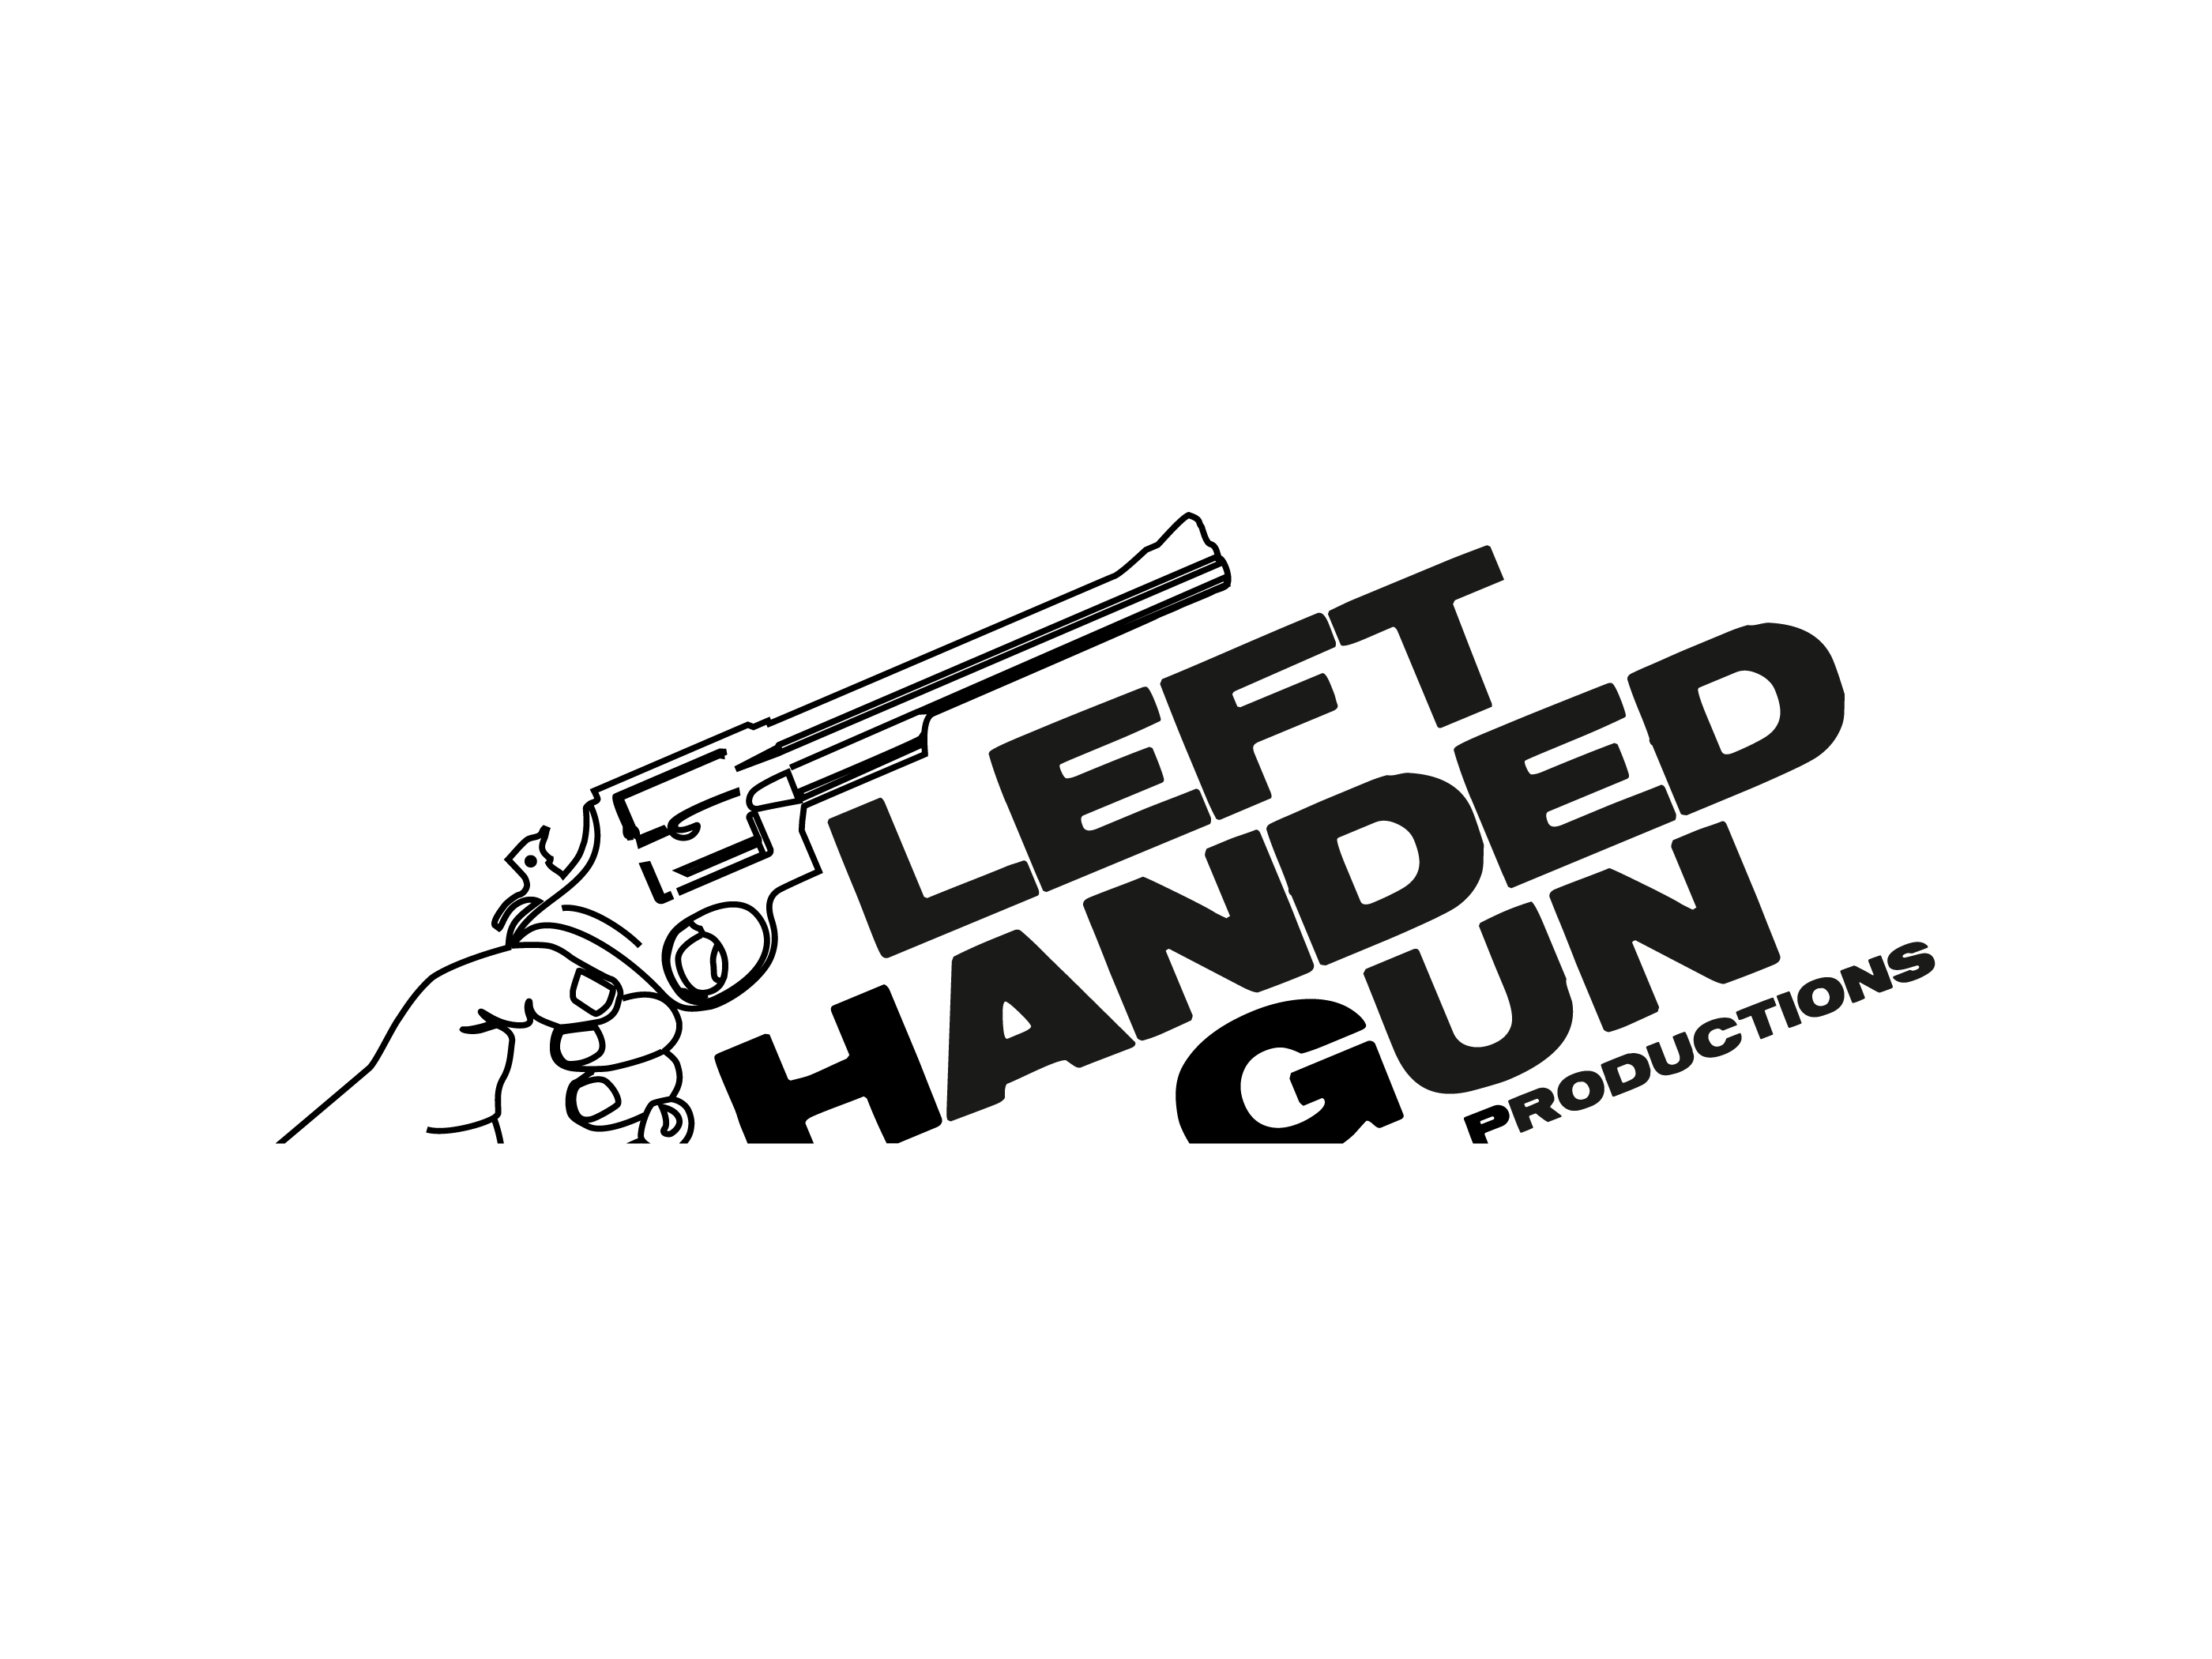 Left Handed Gun Productions Logo